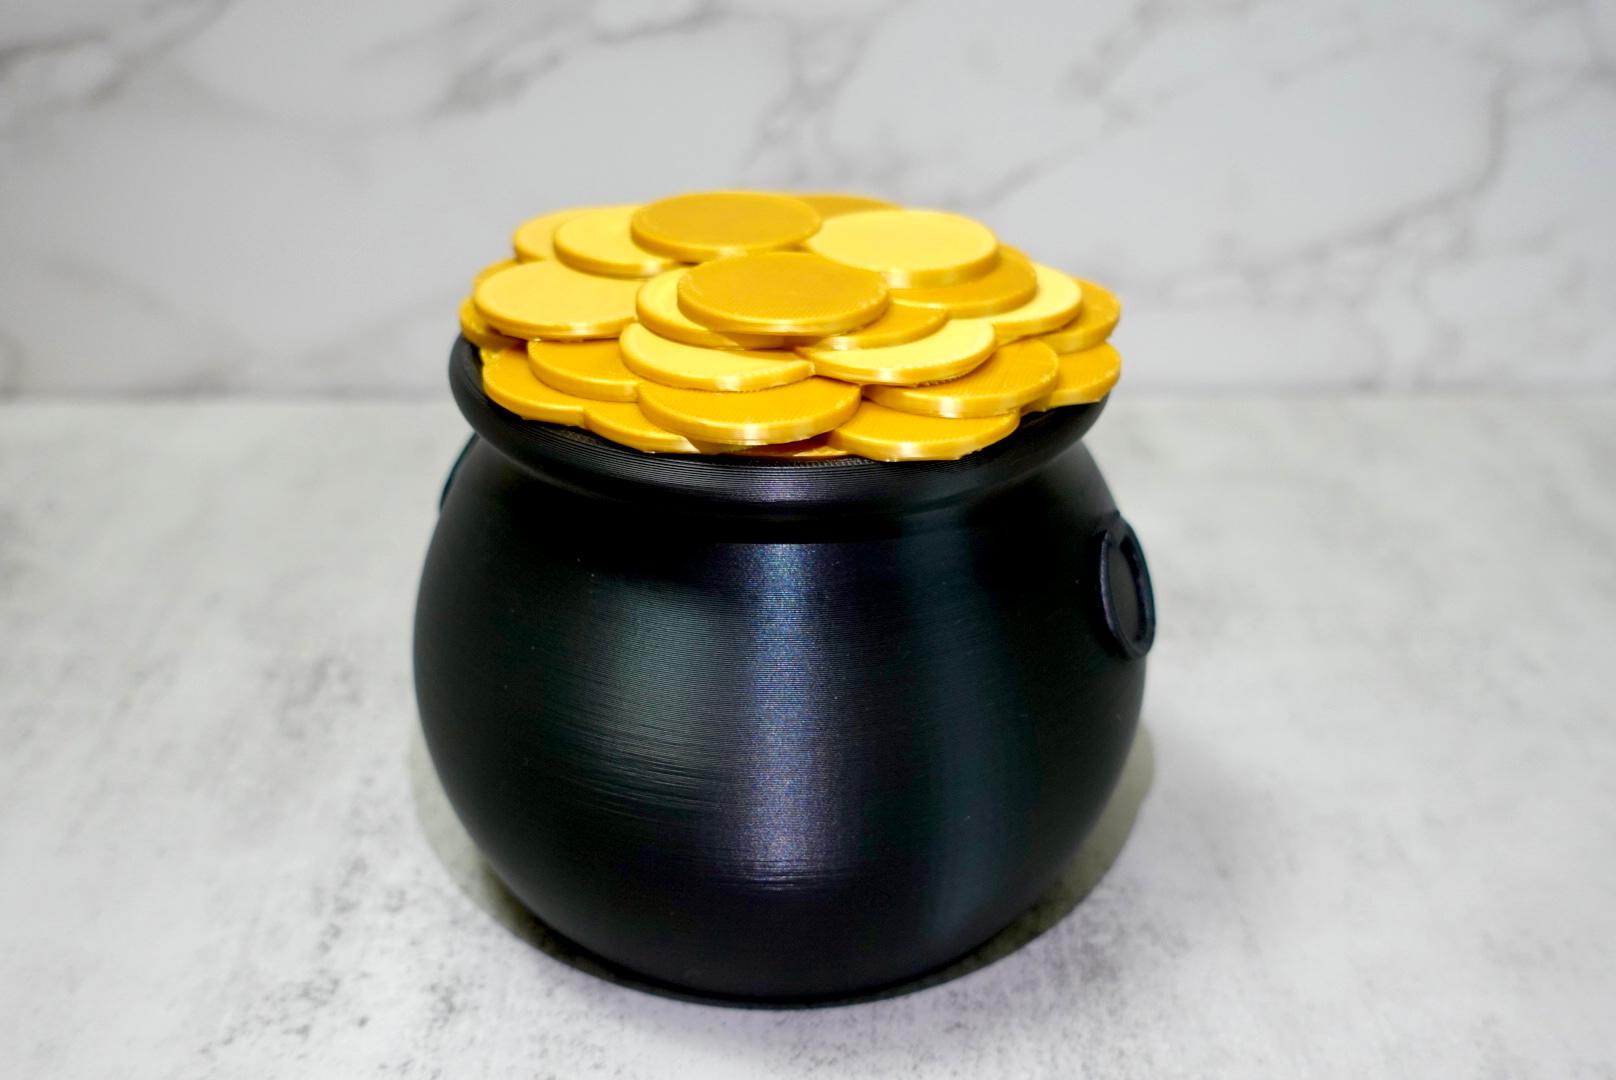 Pot of Gold Organizer 3d model